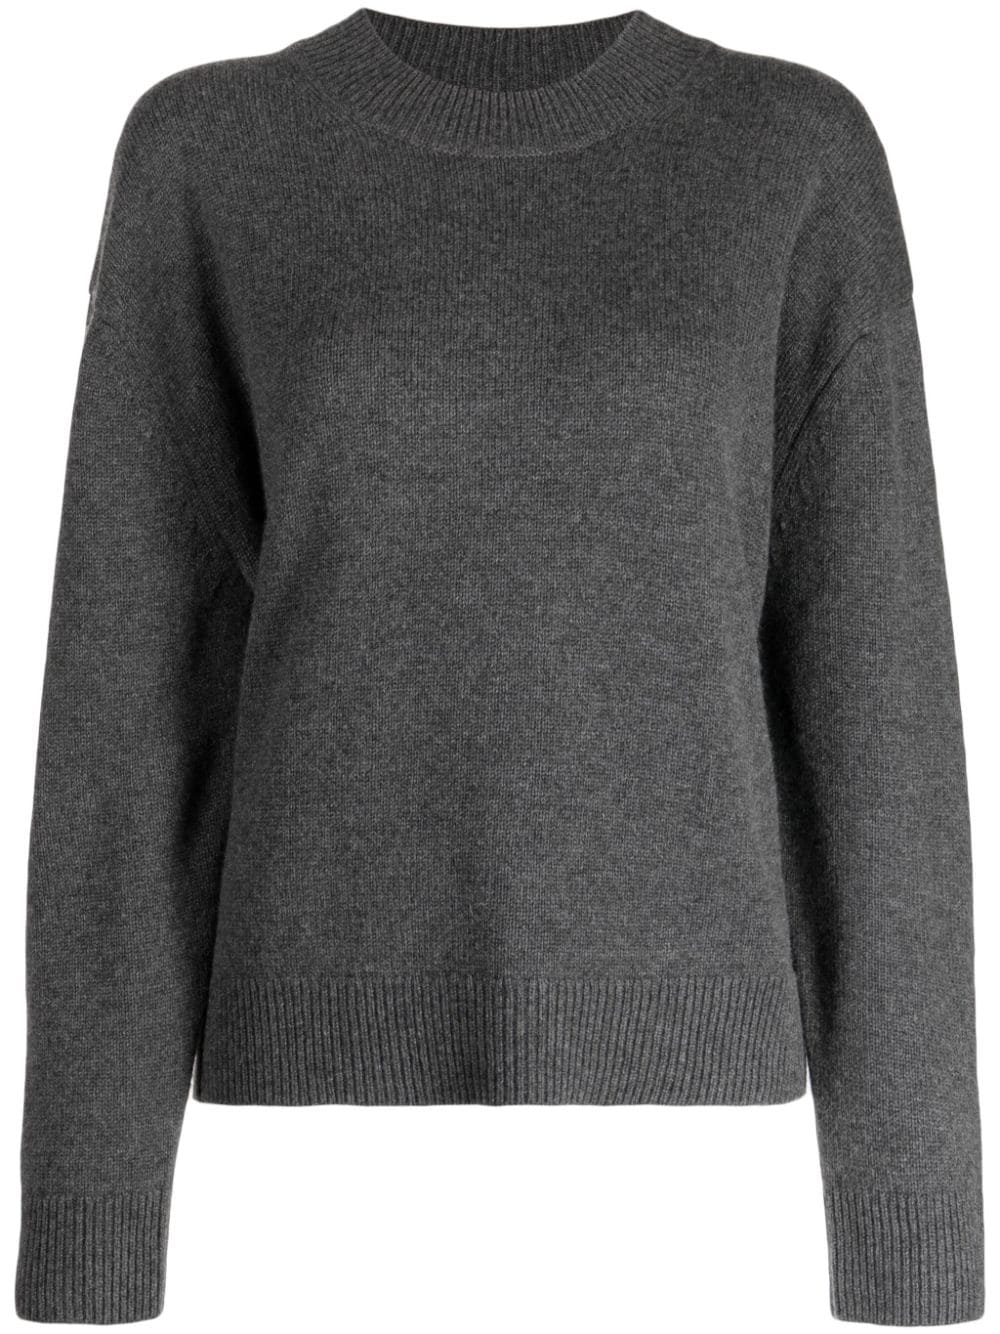 Image 1 of TWP Jenny fine-knit cashmere jumper